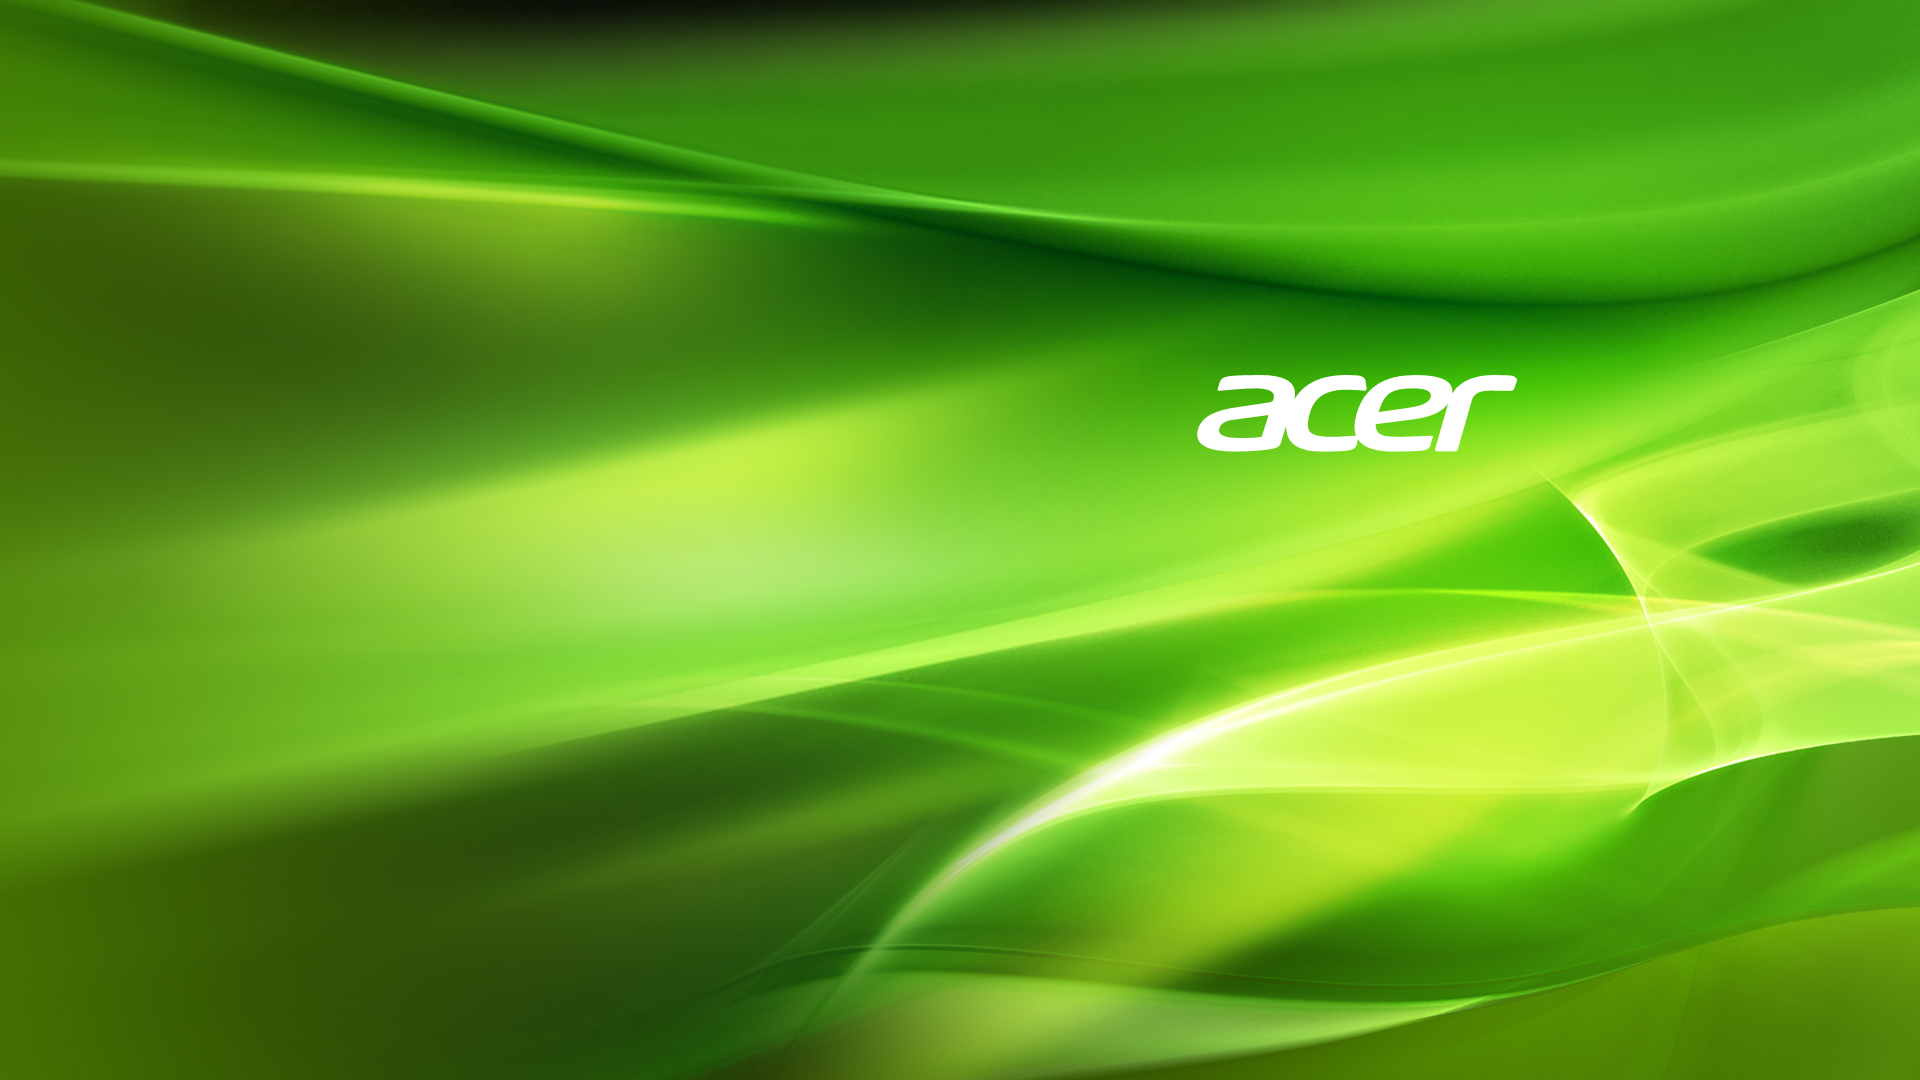 Acer Wallpaper HD | PixelsTalk.Net